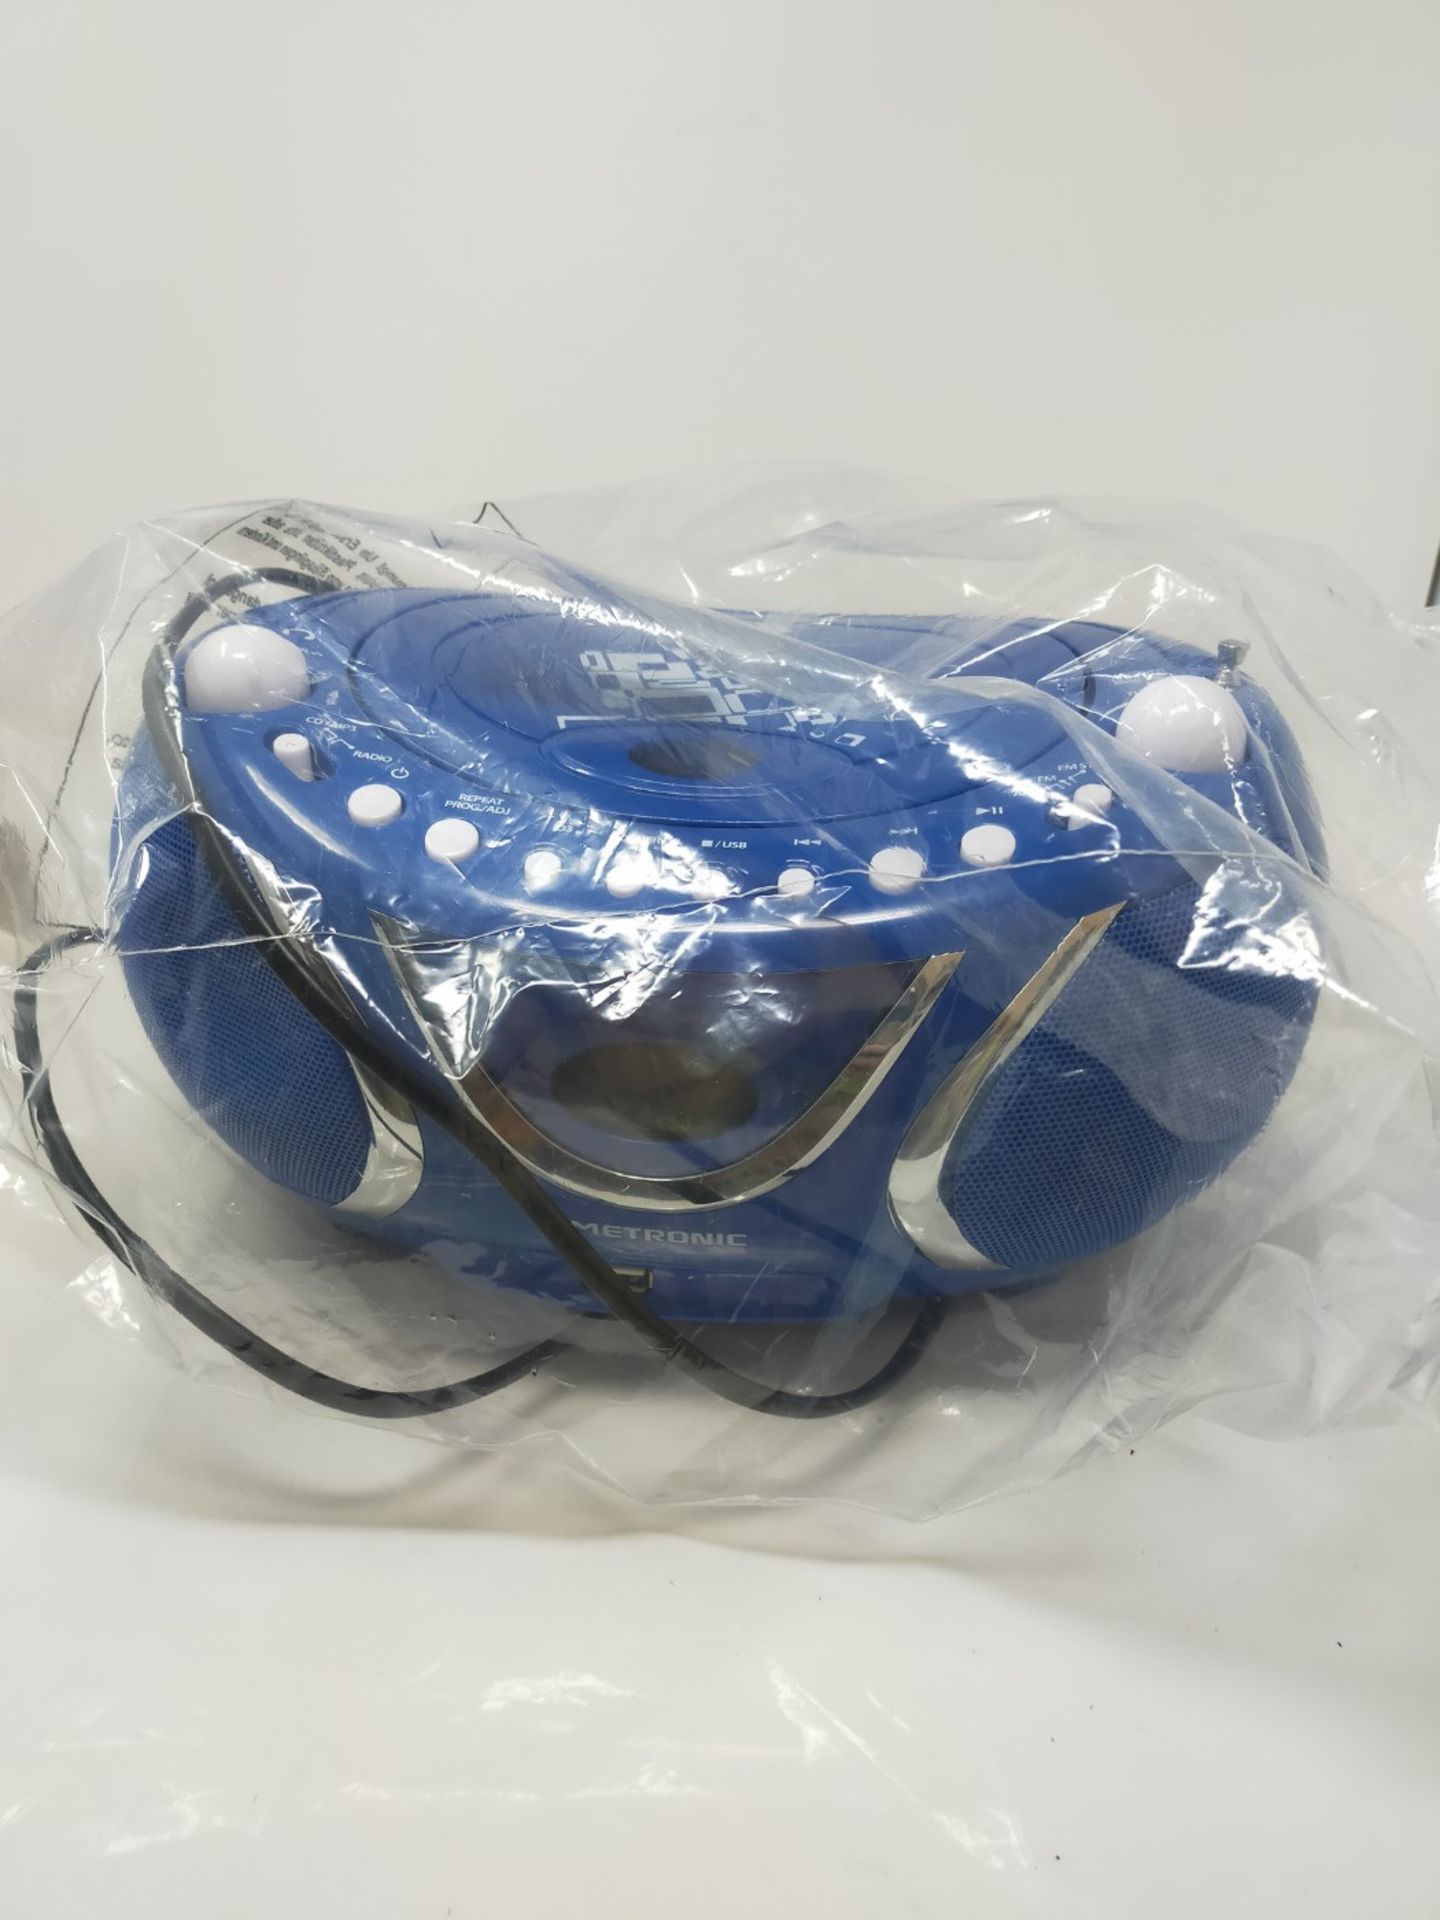 Metronic Gulli Radio/CD Player / MP3 Portable blue - Image 2 of 3